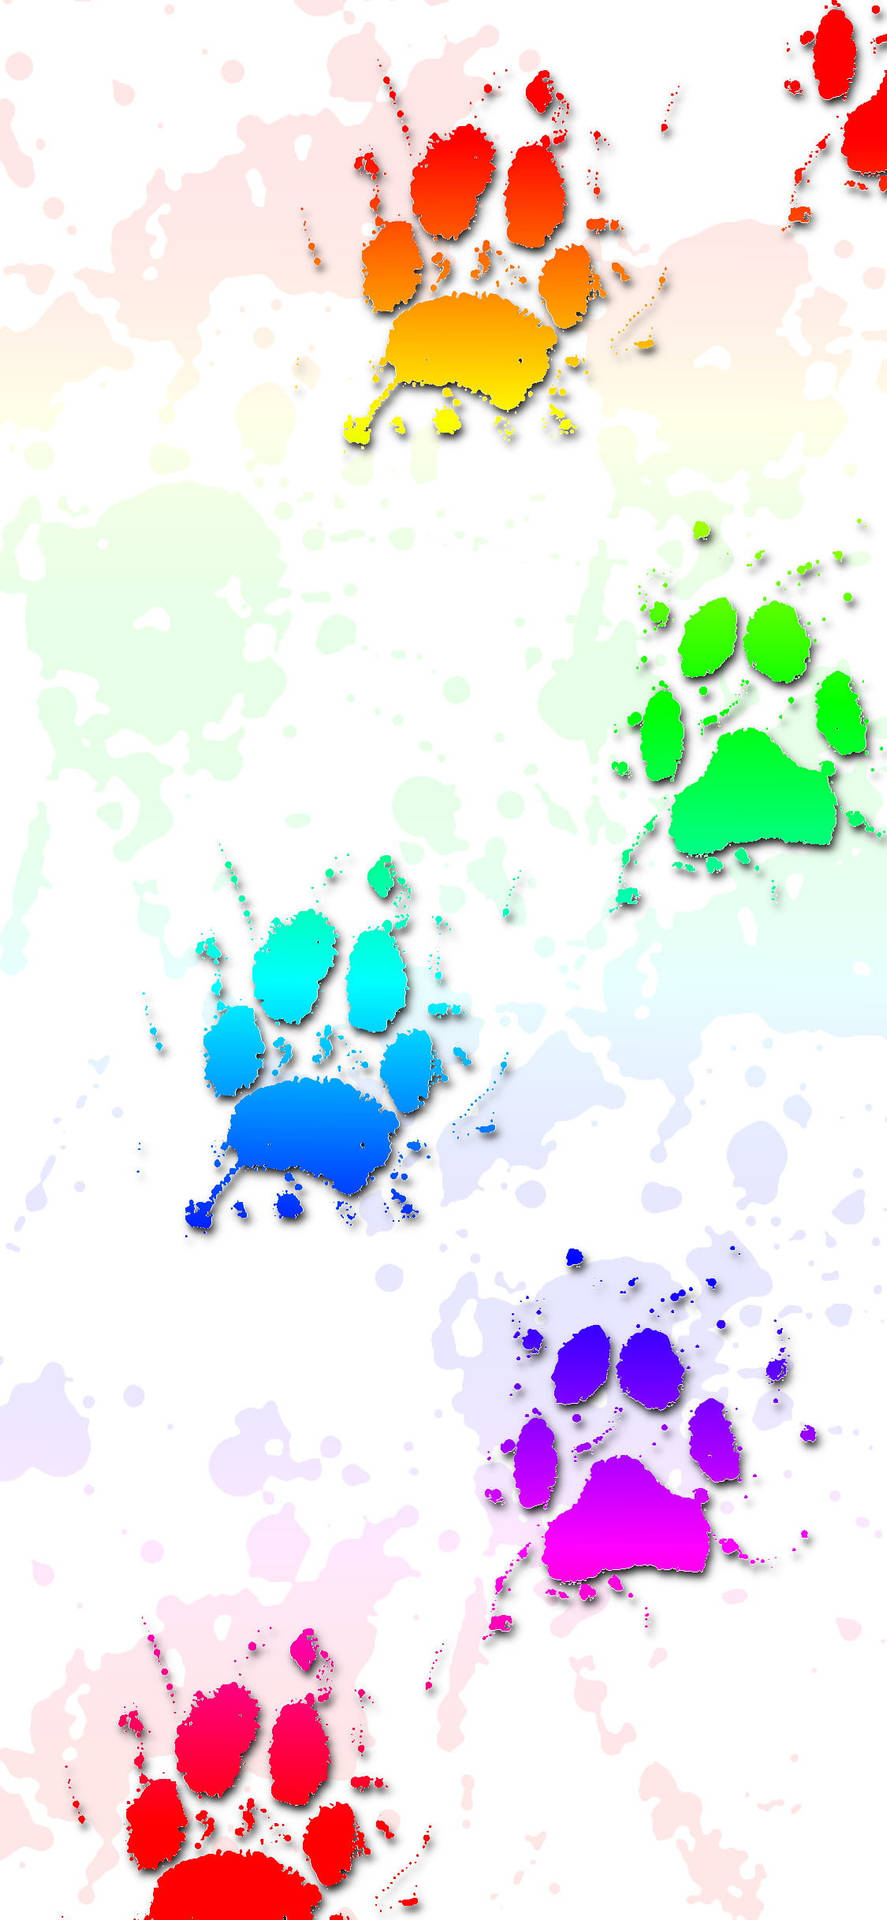 Splatterfarbe Hundepfoten Wallpaper